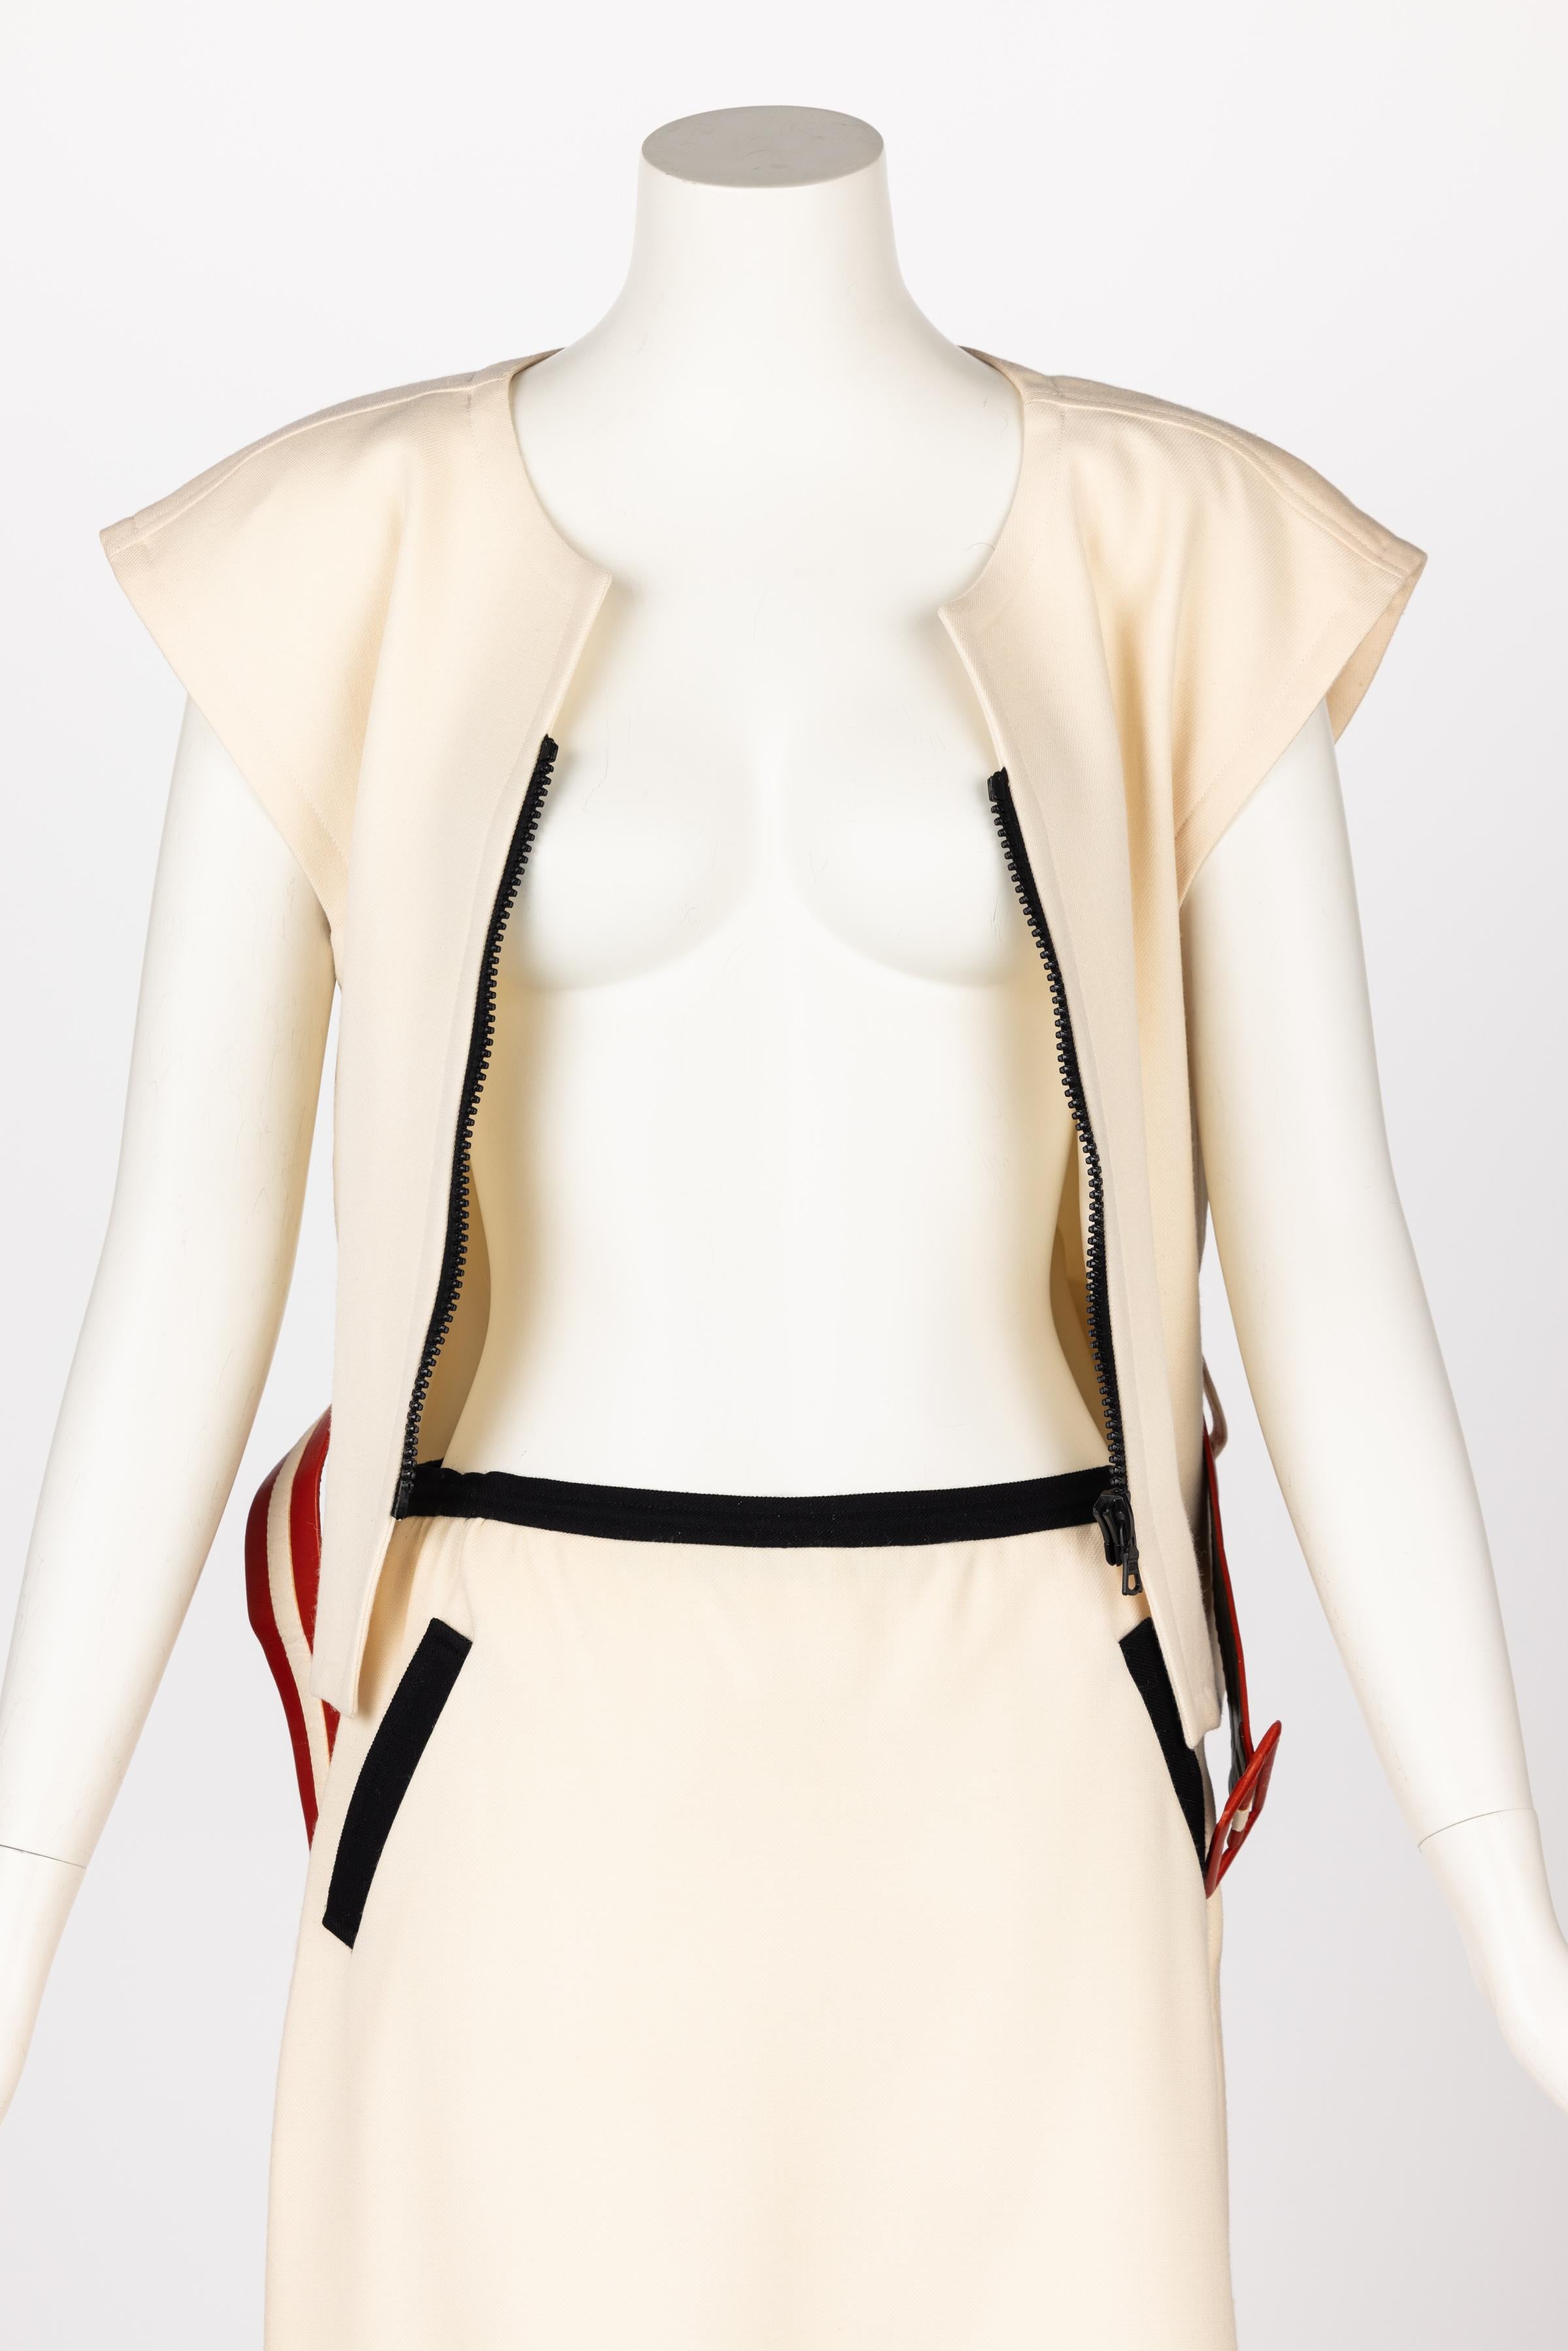 VIintage Courrèges Paris Ivory Wool Belted Jacket & Skirt For Sale 3